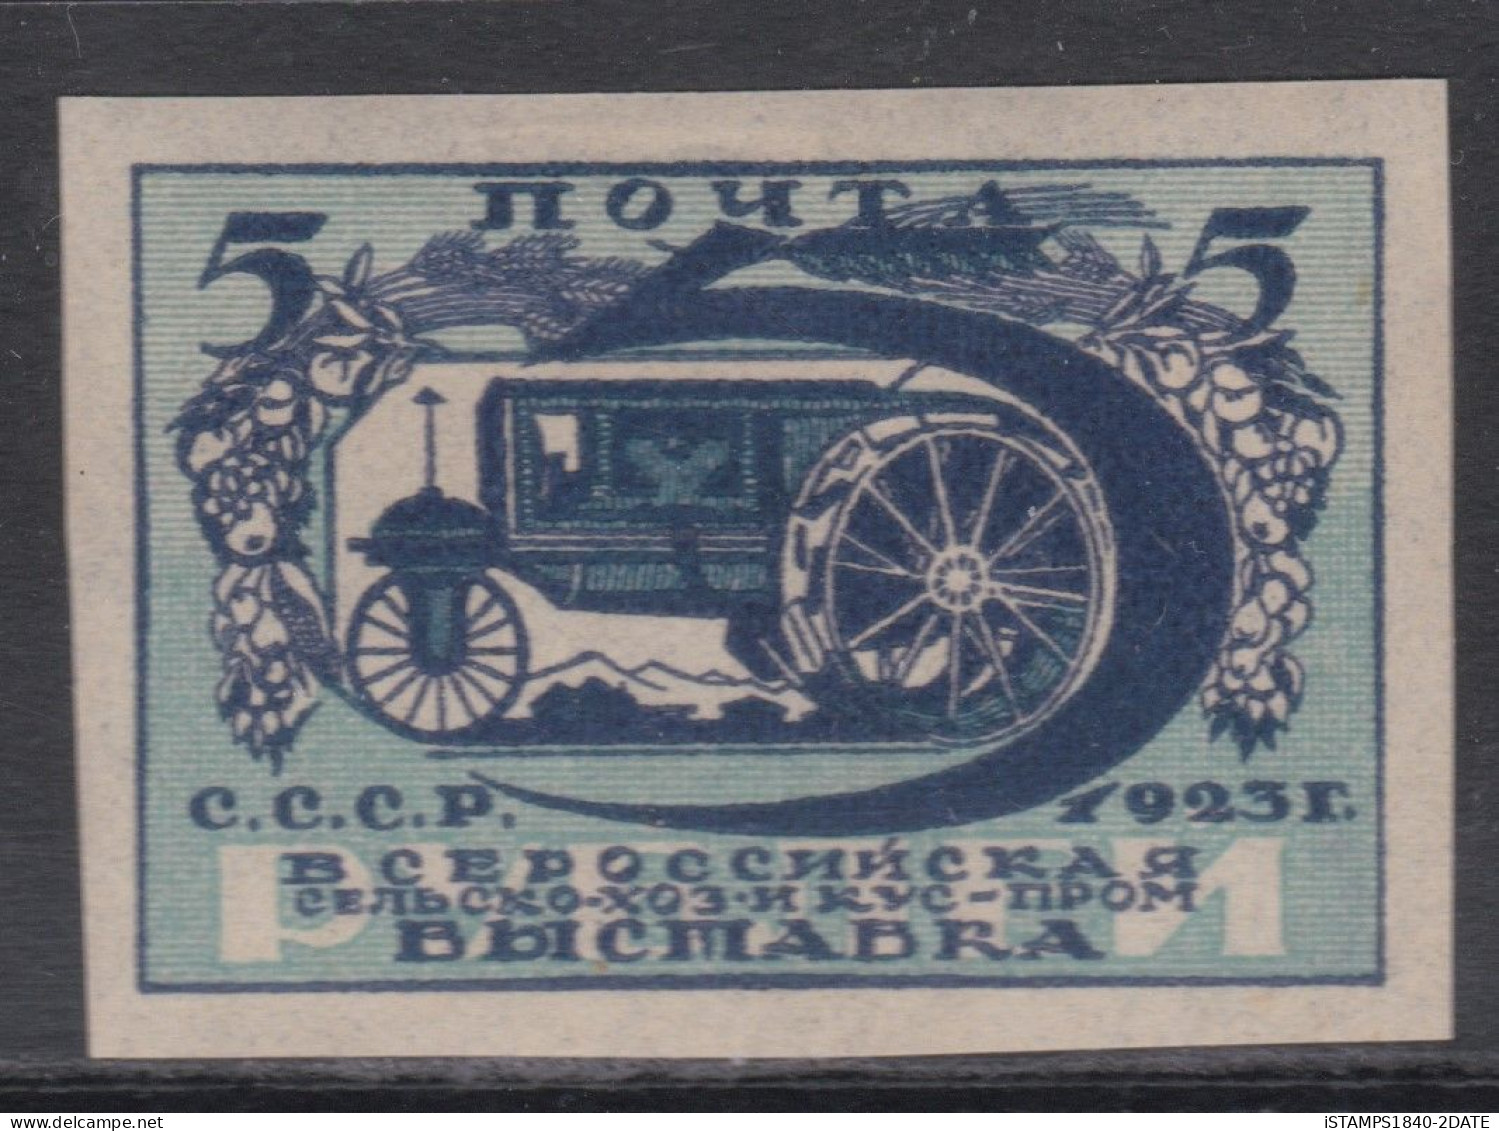 00521/ Russia 1923 Sg327 3r Blue & Light Blue M/M Imperf Agricultural Exhibition Cv £3.75 - Nuevos